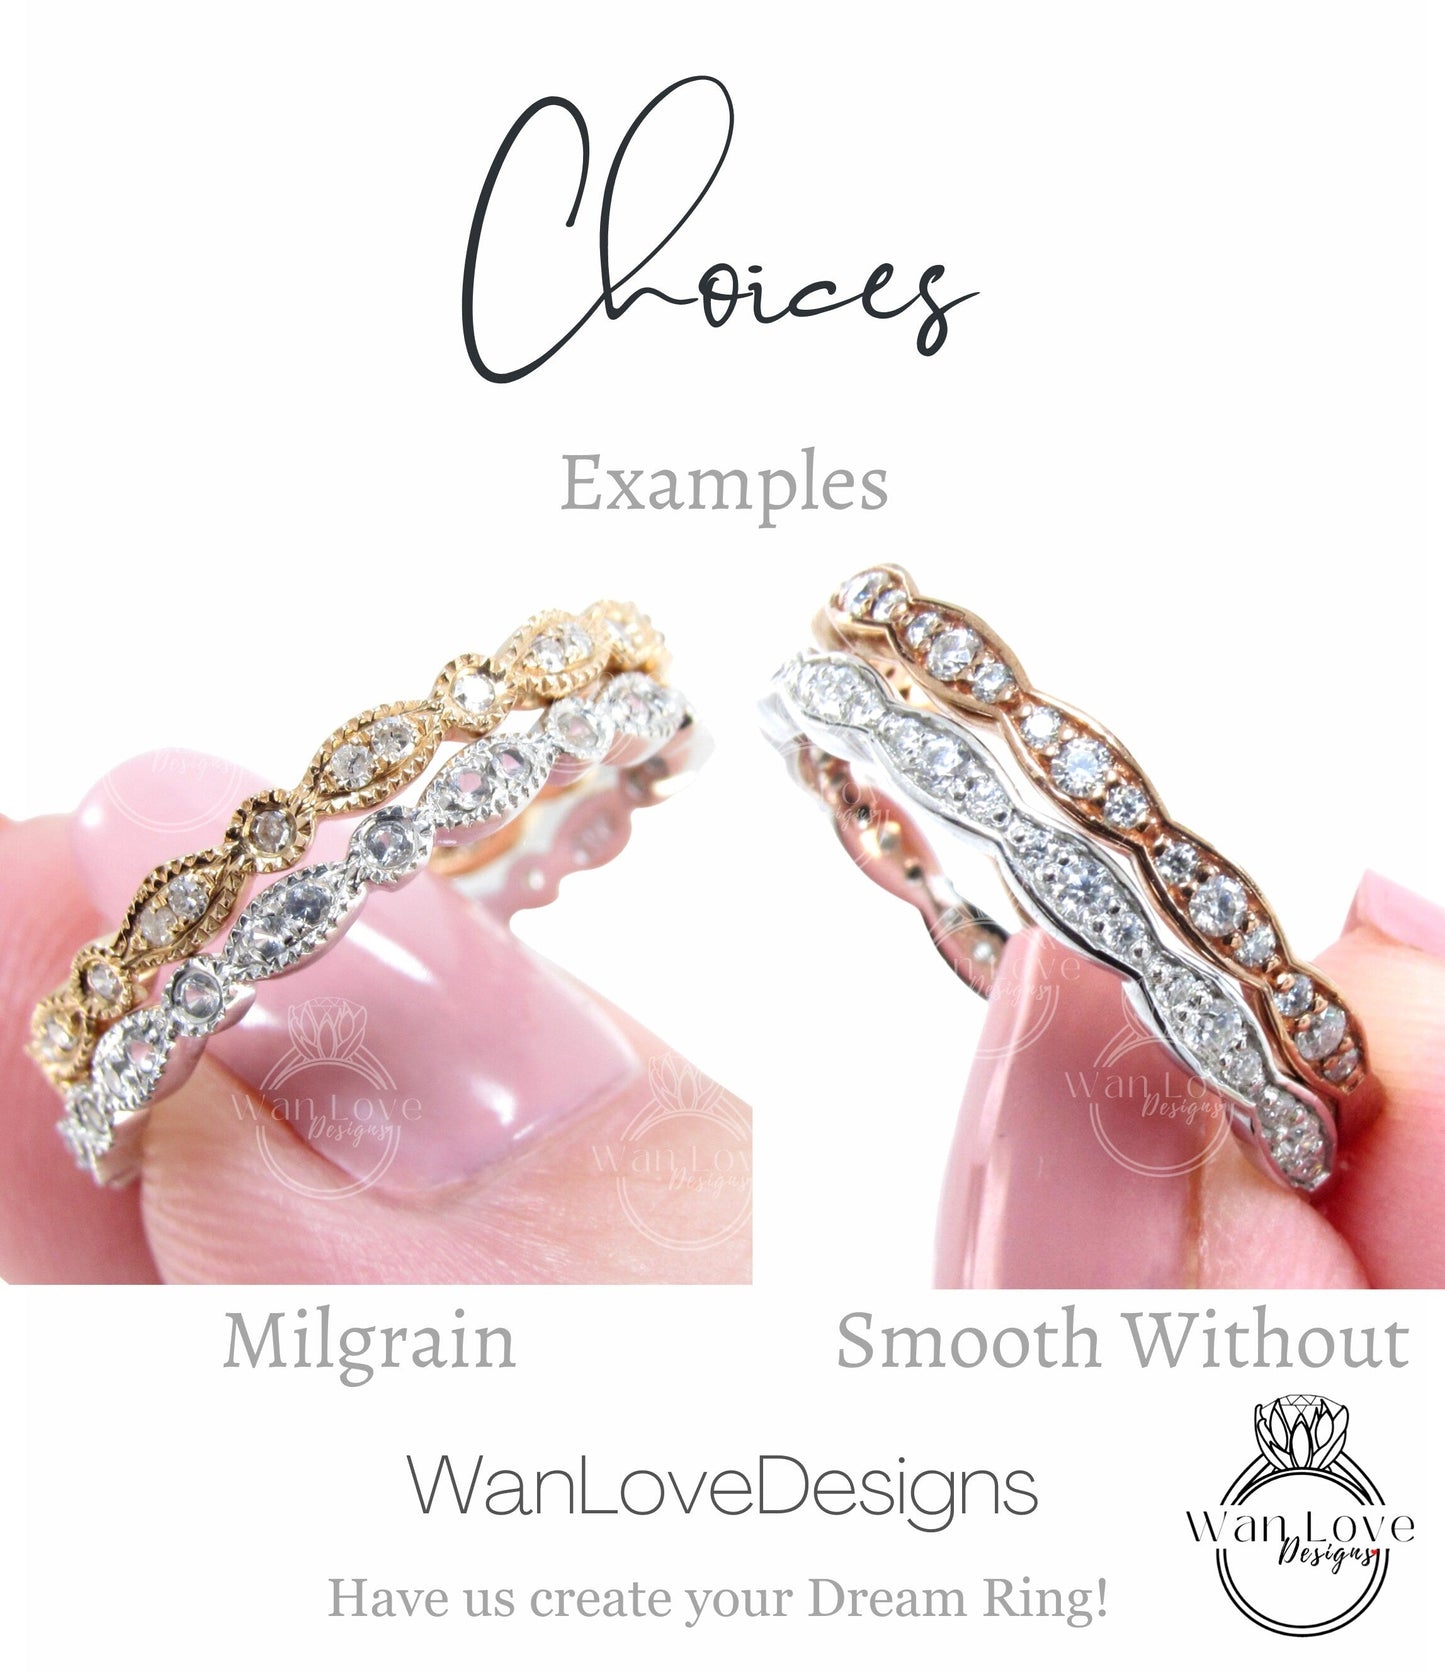 Art Deco Pear Engagement Ring, Antique Moissanite engagement ring, diamond milgrain halo ring, vintage halo Moissanite Ring,Unique Halo Ring Wan Love Designs